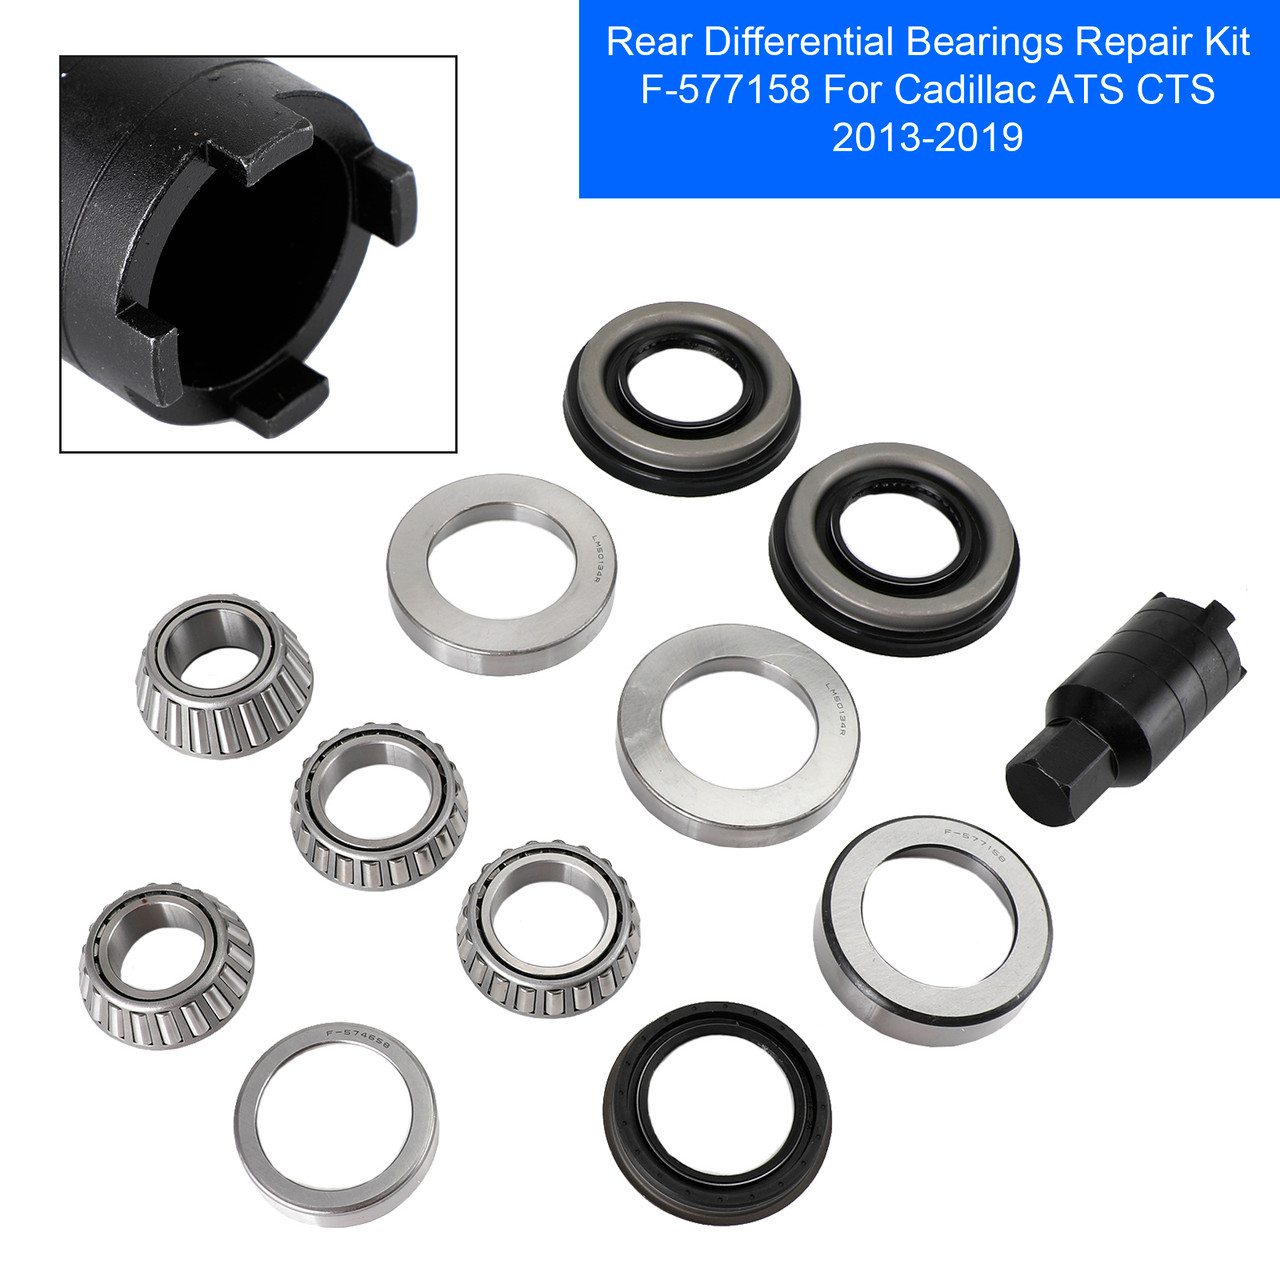 Rear Differential Bearings Repair Kit F-577158 For Cadillac ATS CTS 2013-2019